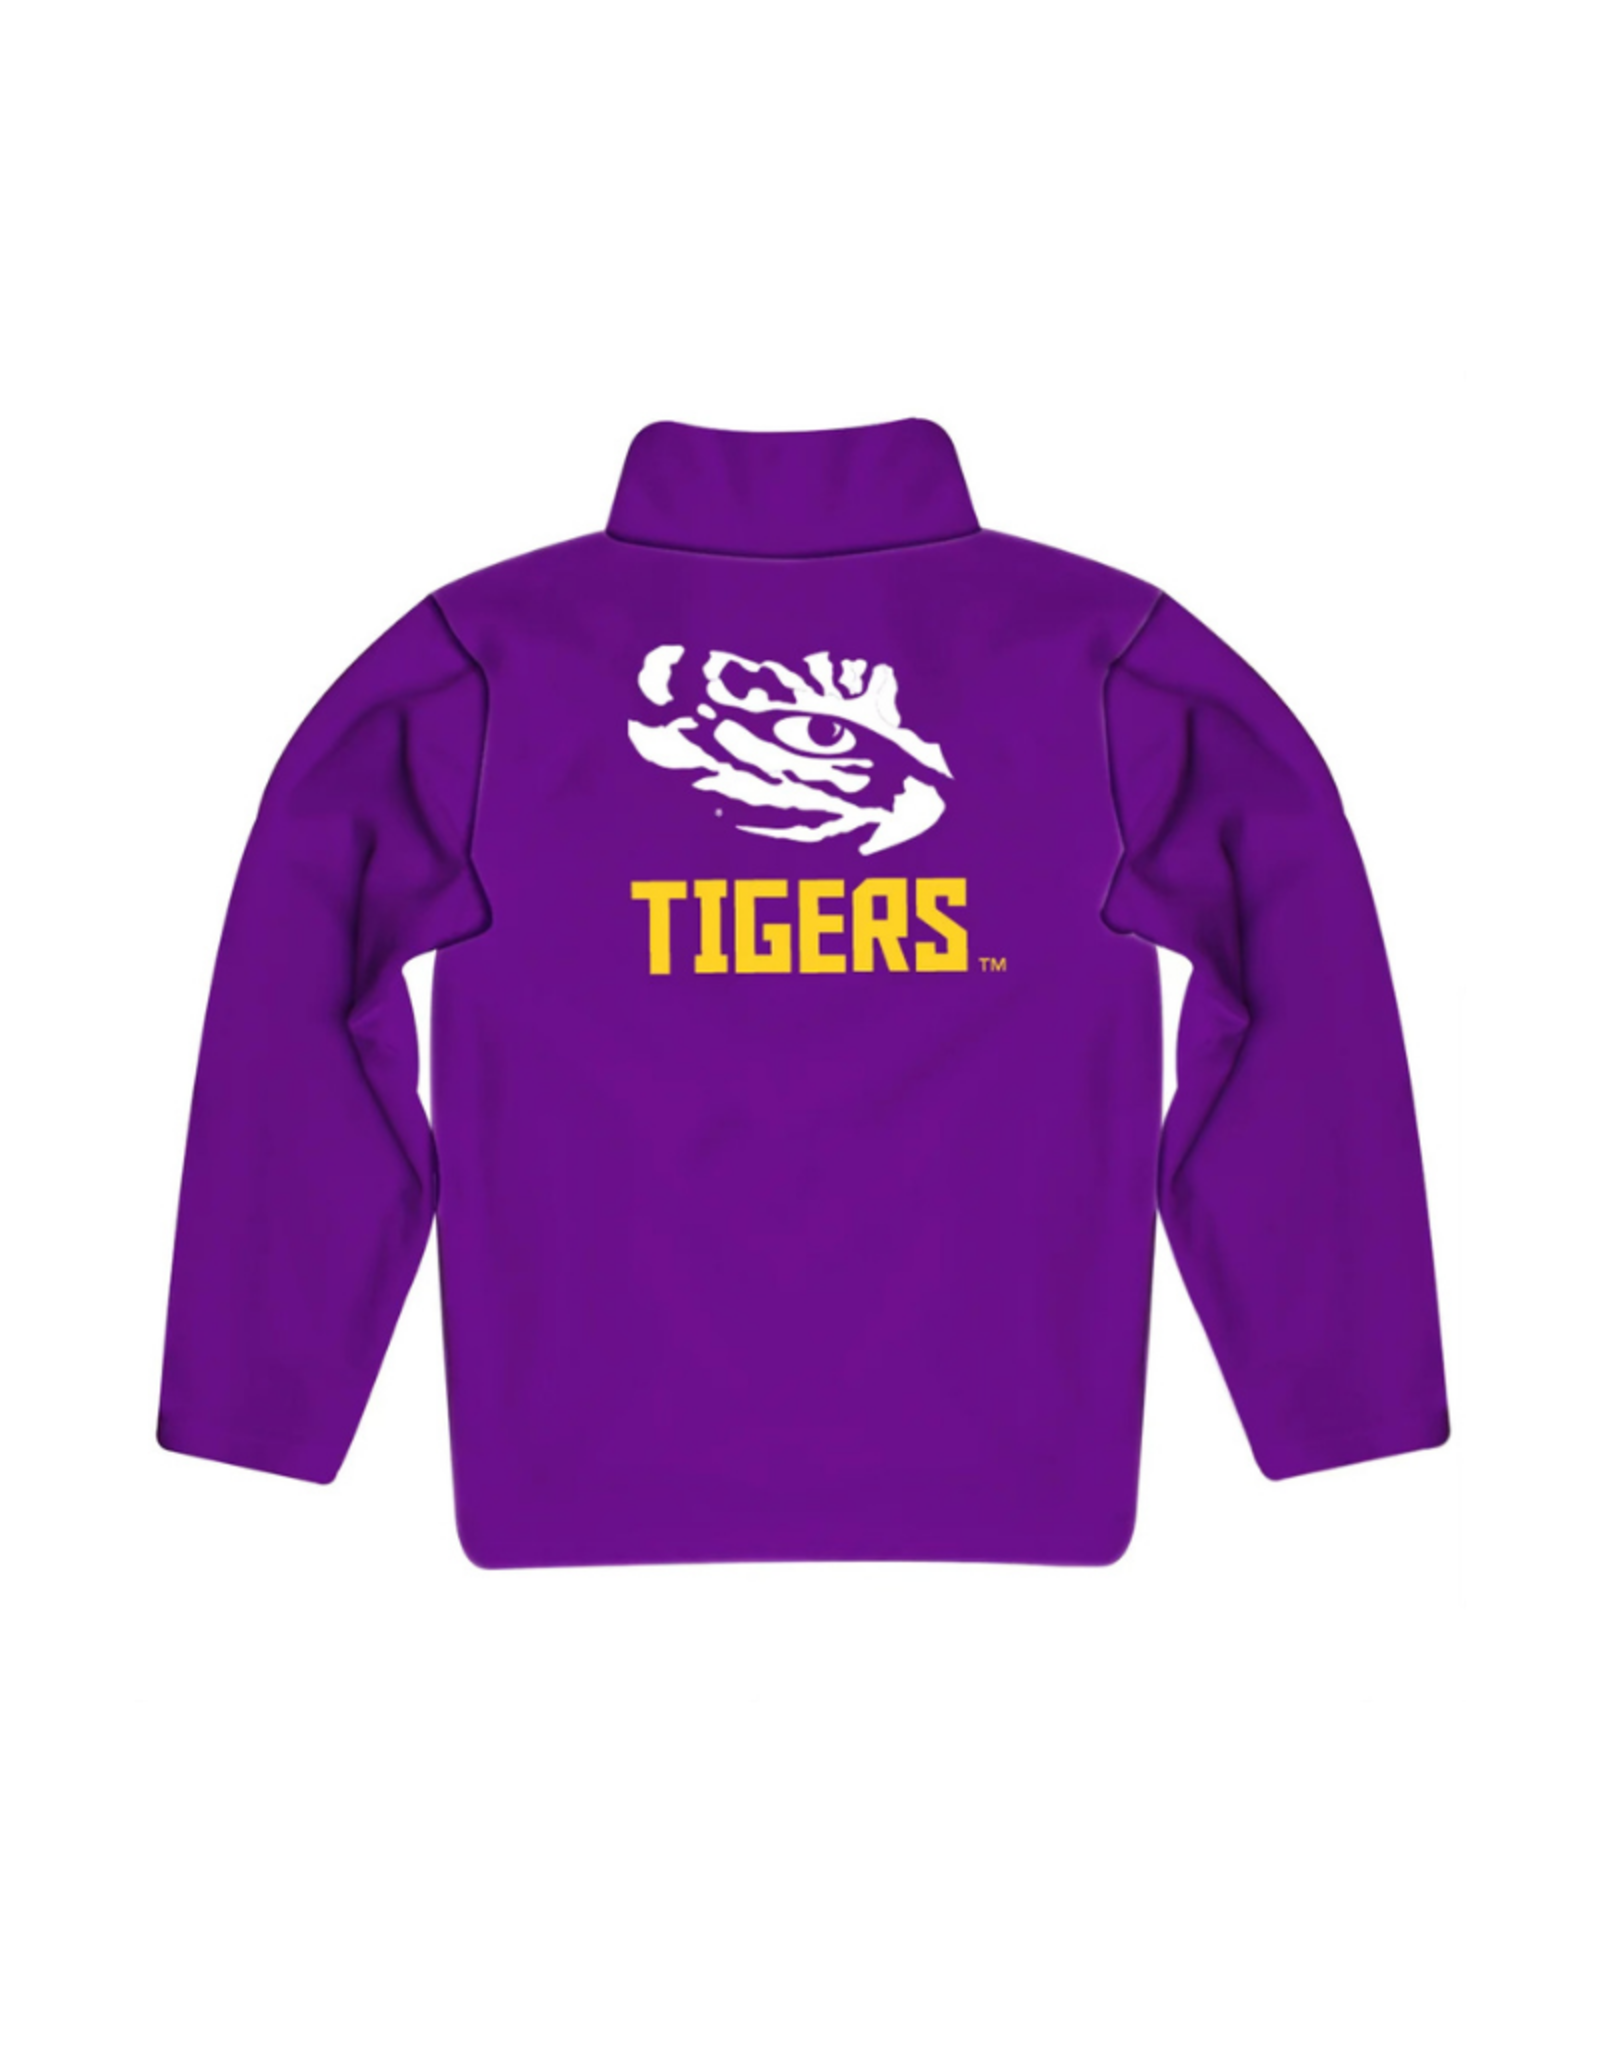 LSU Tigers Purple Long Sleeve Quarter Zip Dry Fit